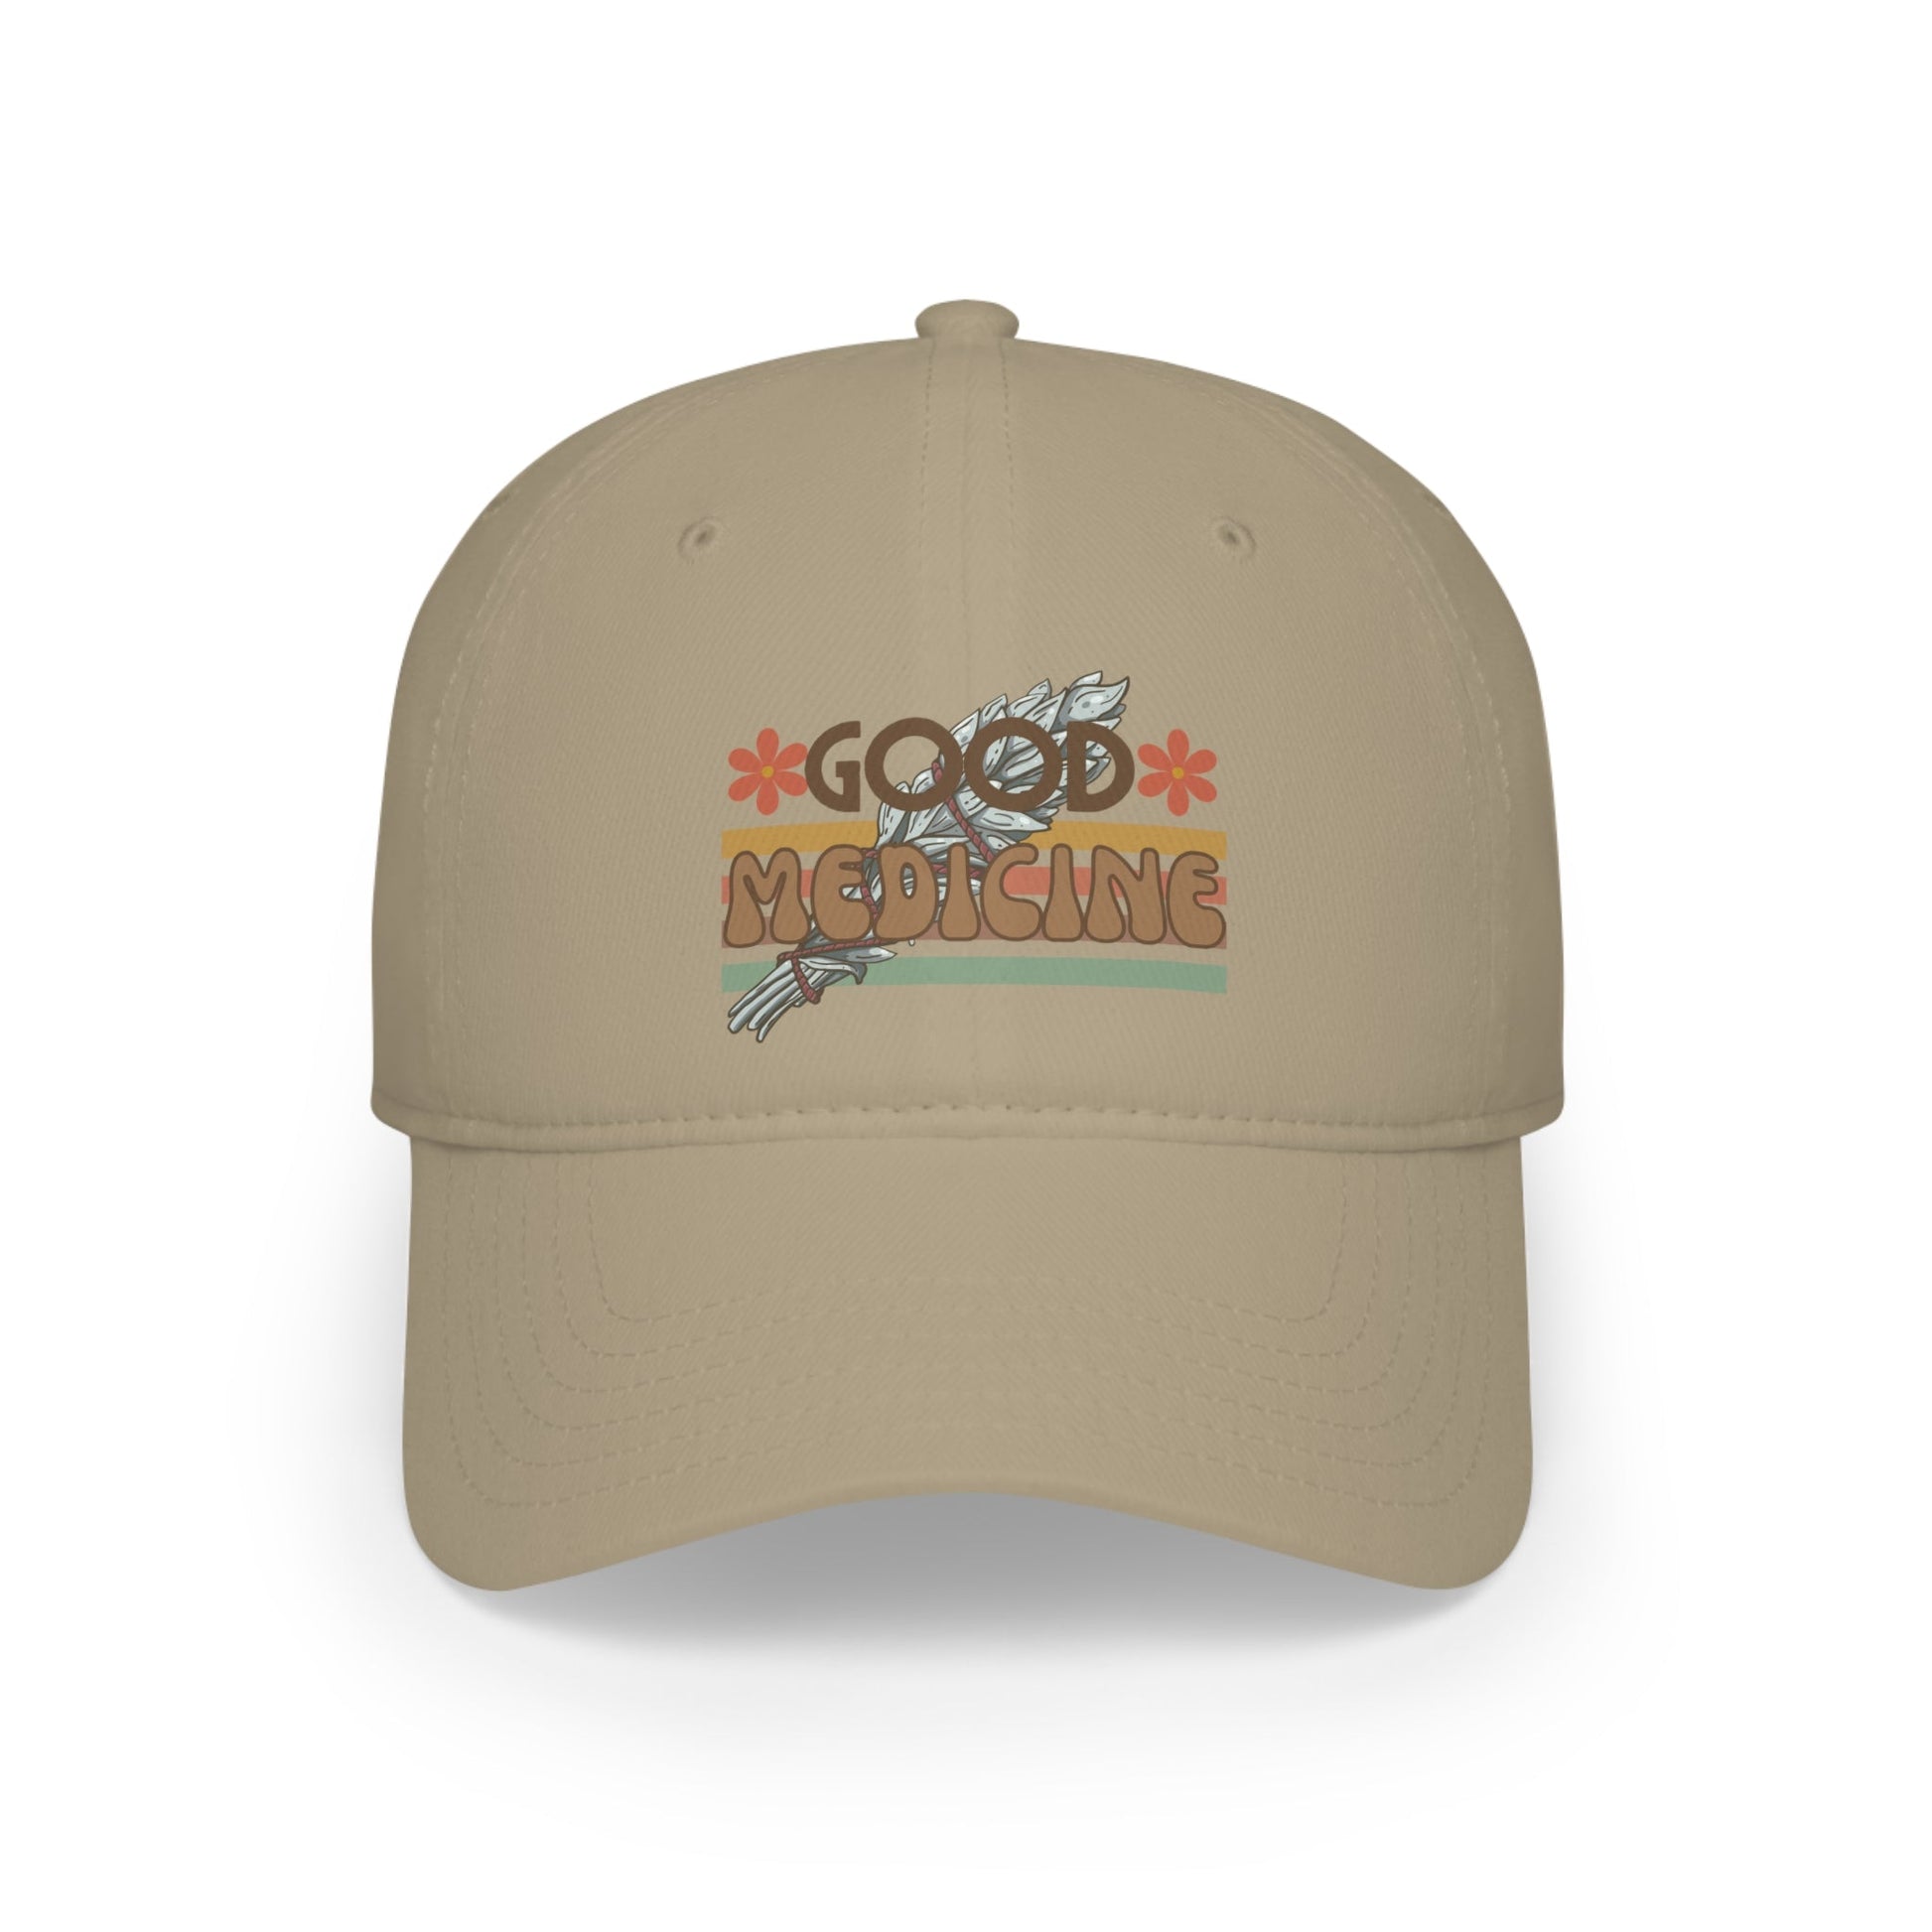 Good Medicine Baseball Cap - Nikikw Designs